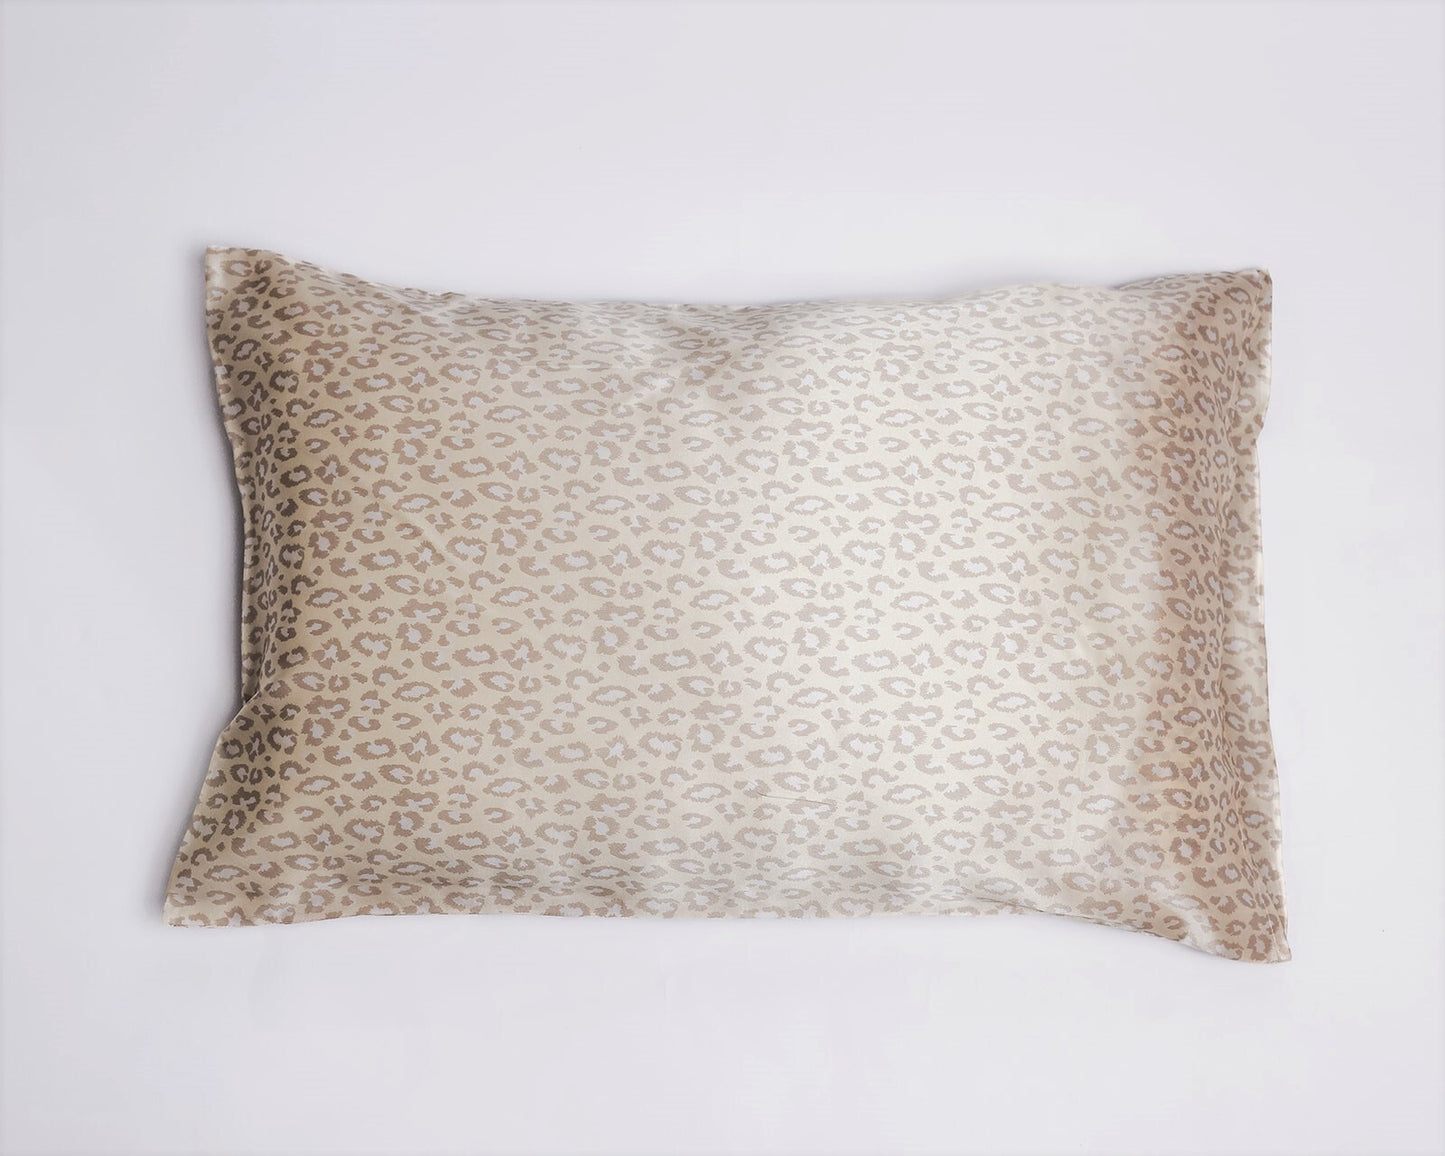 Silk Magnolia Sand Leopard Pure Silk Pillowcase